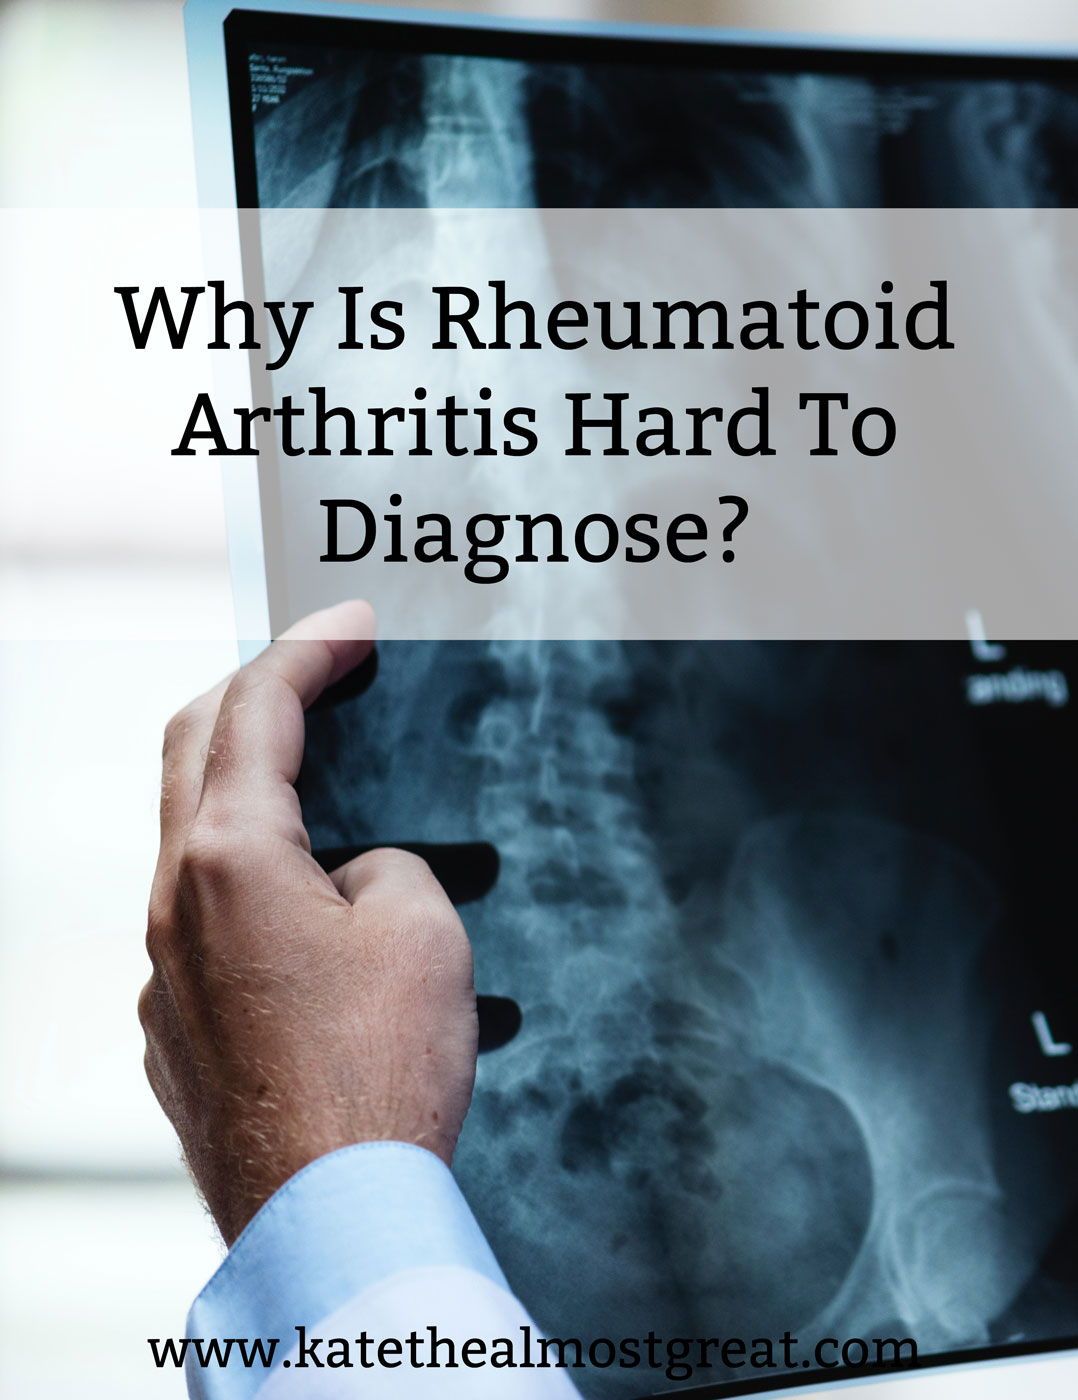 Why Is Rheumatoid Arthritis Hard to Diagnose